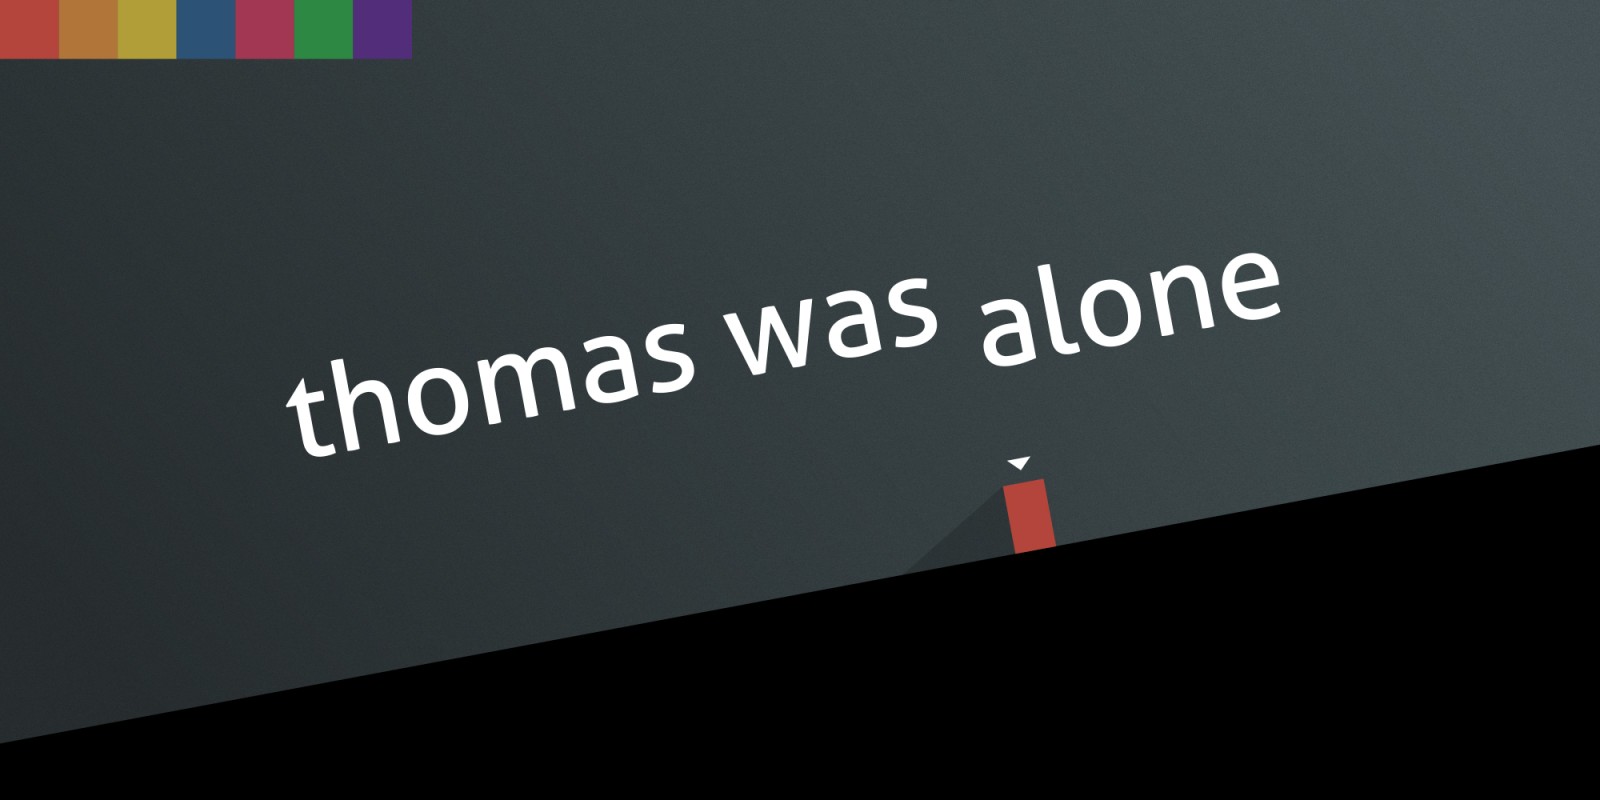 download free thomas was alone